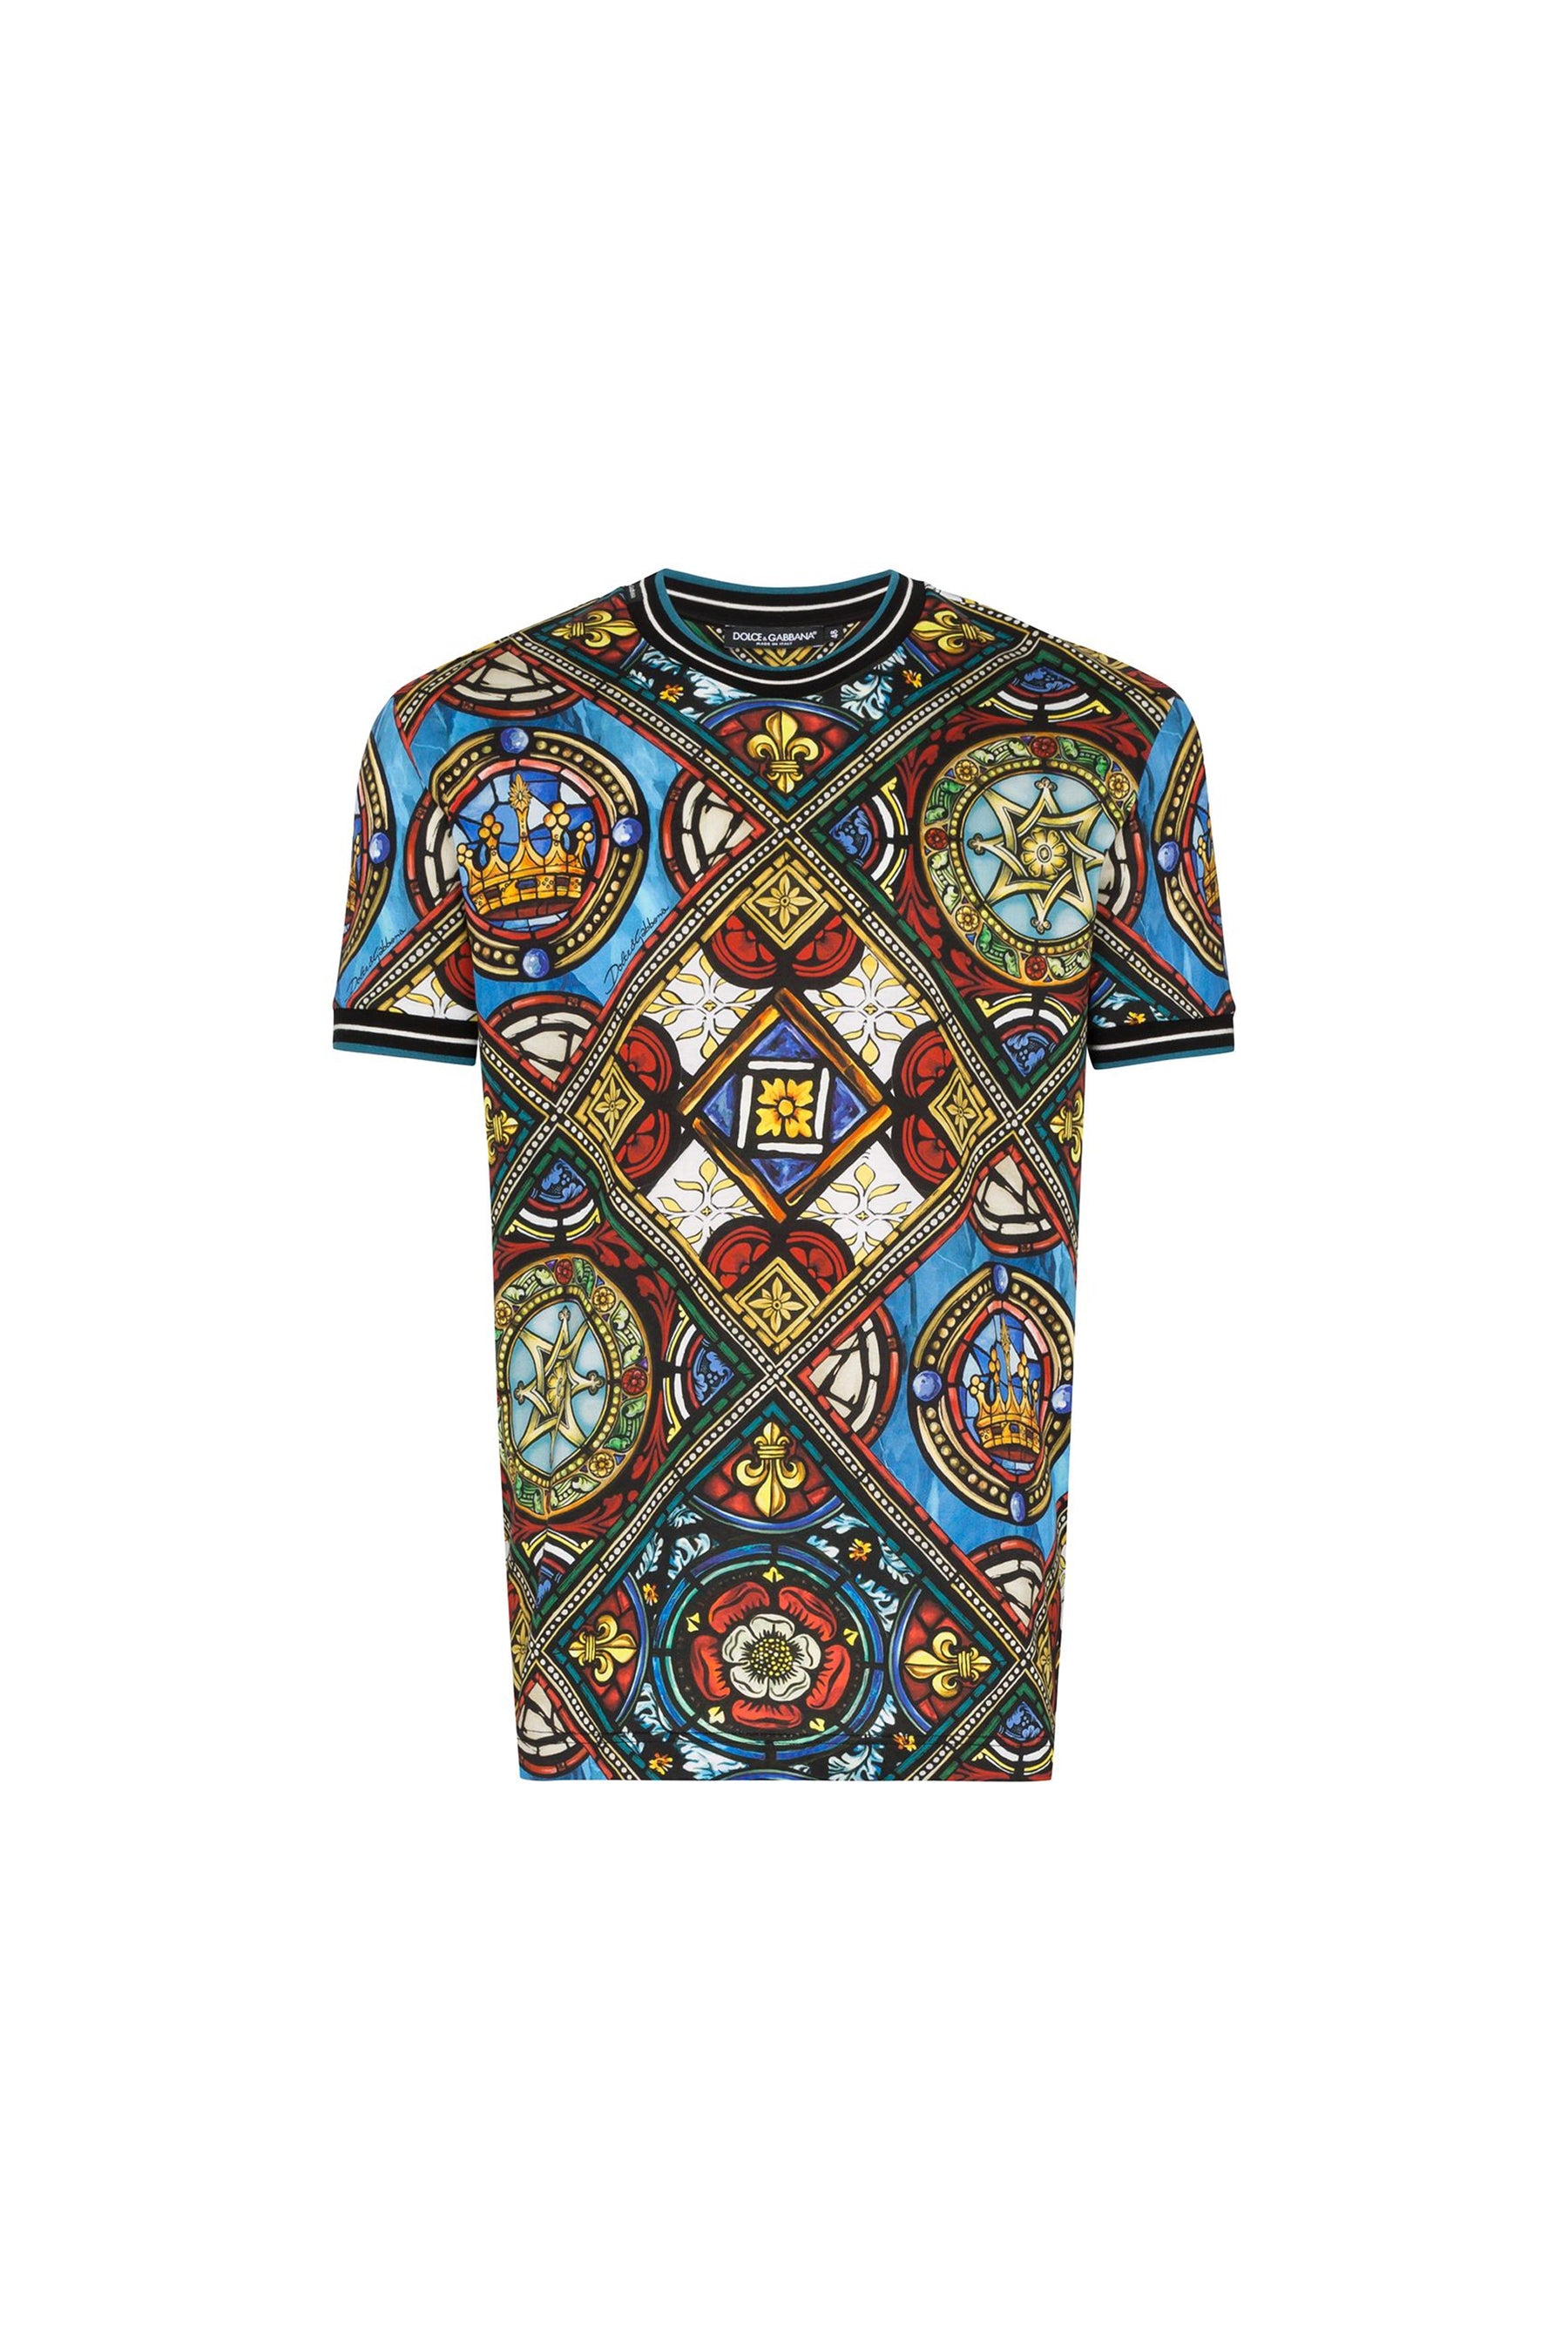 Dolce & Gabbana King's Age printed stretch cotton T-shirt